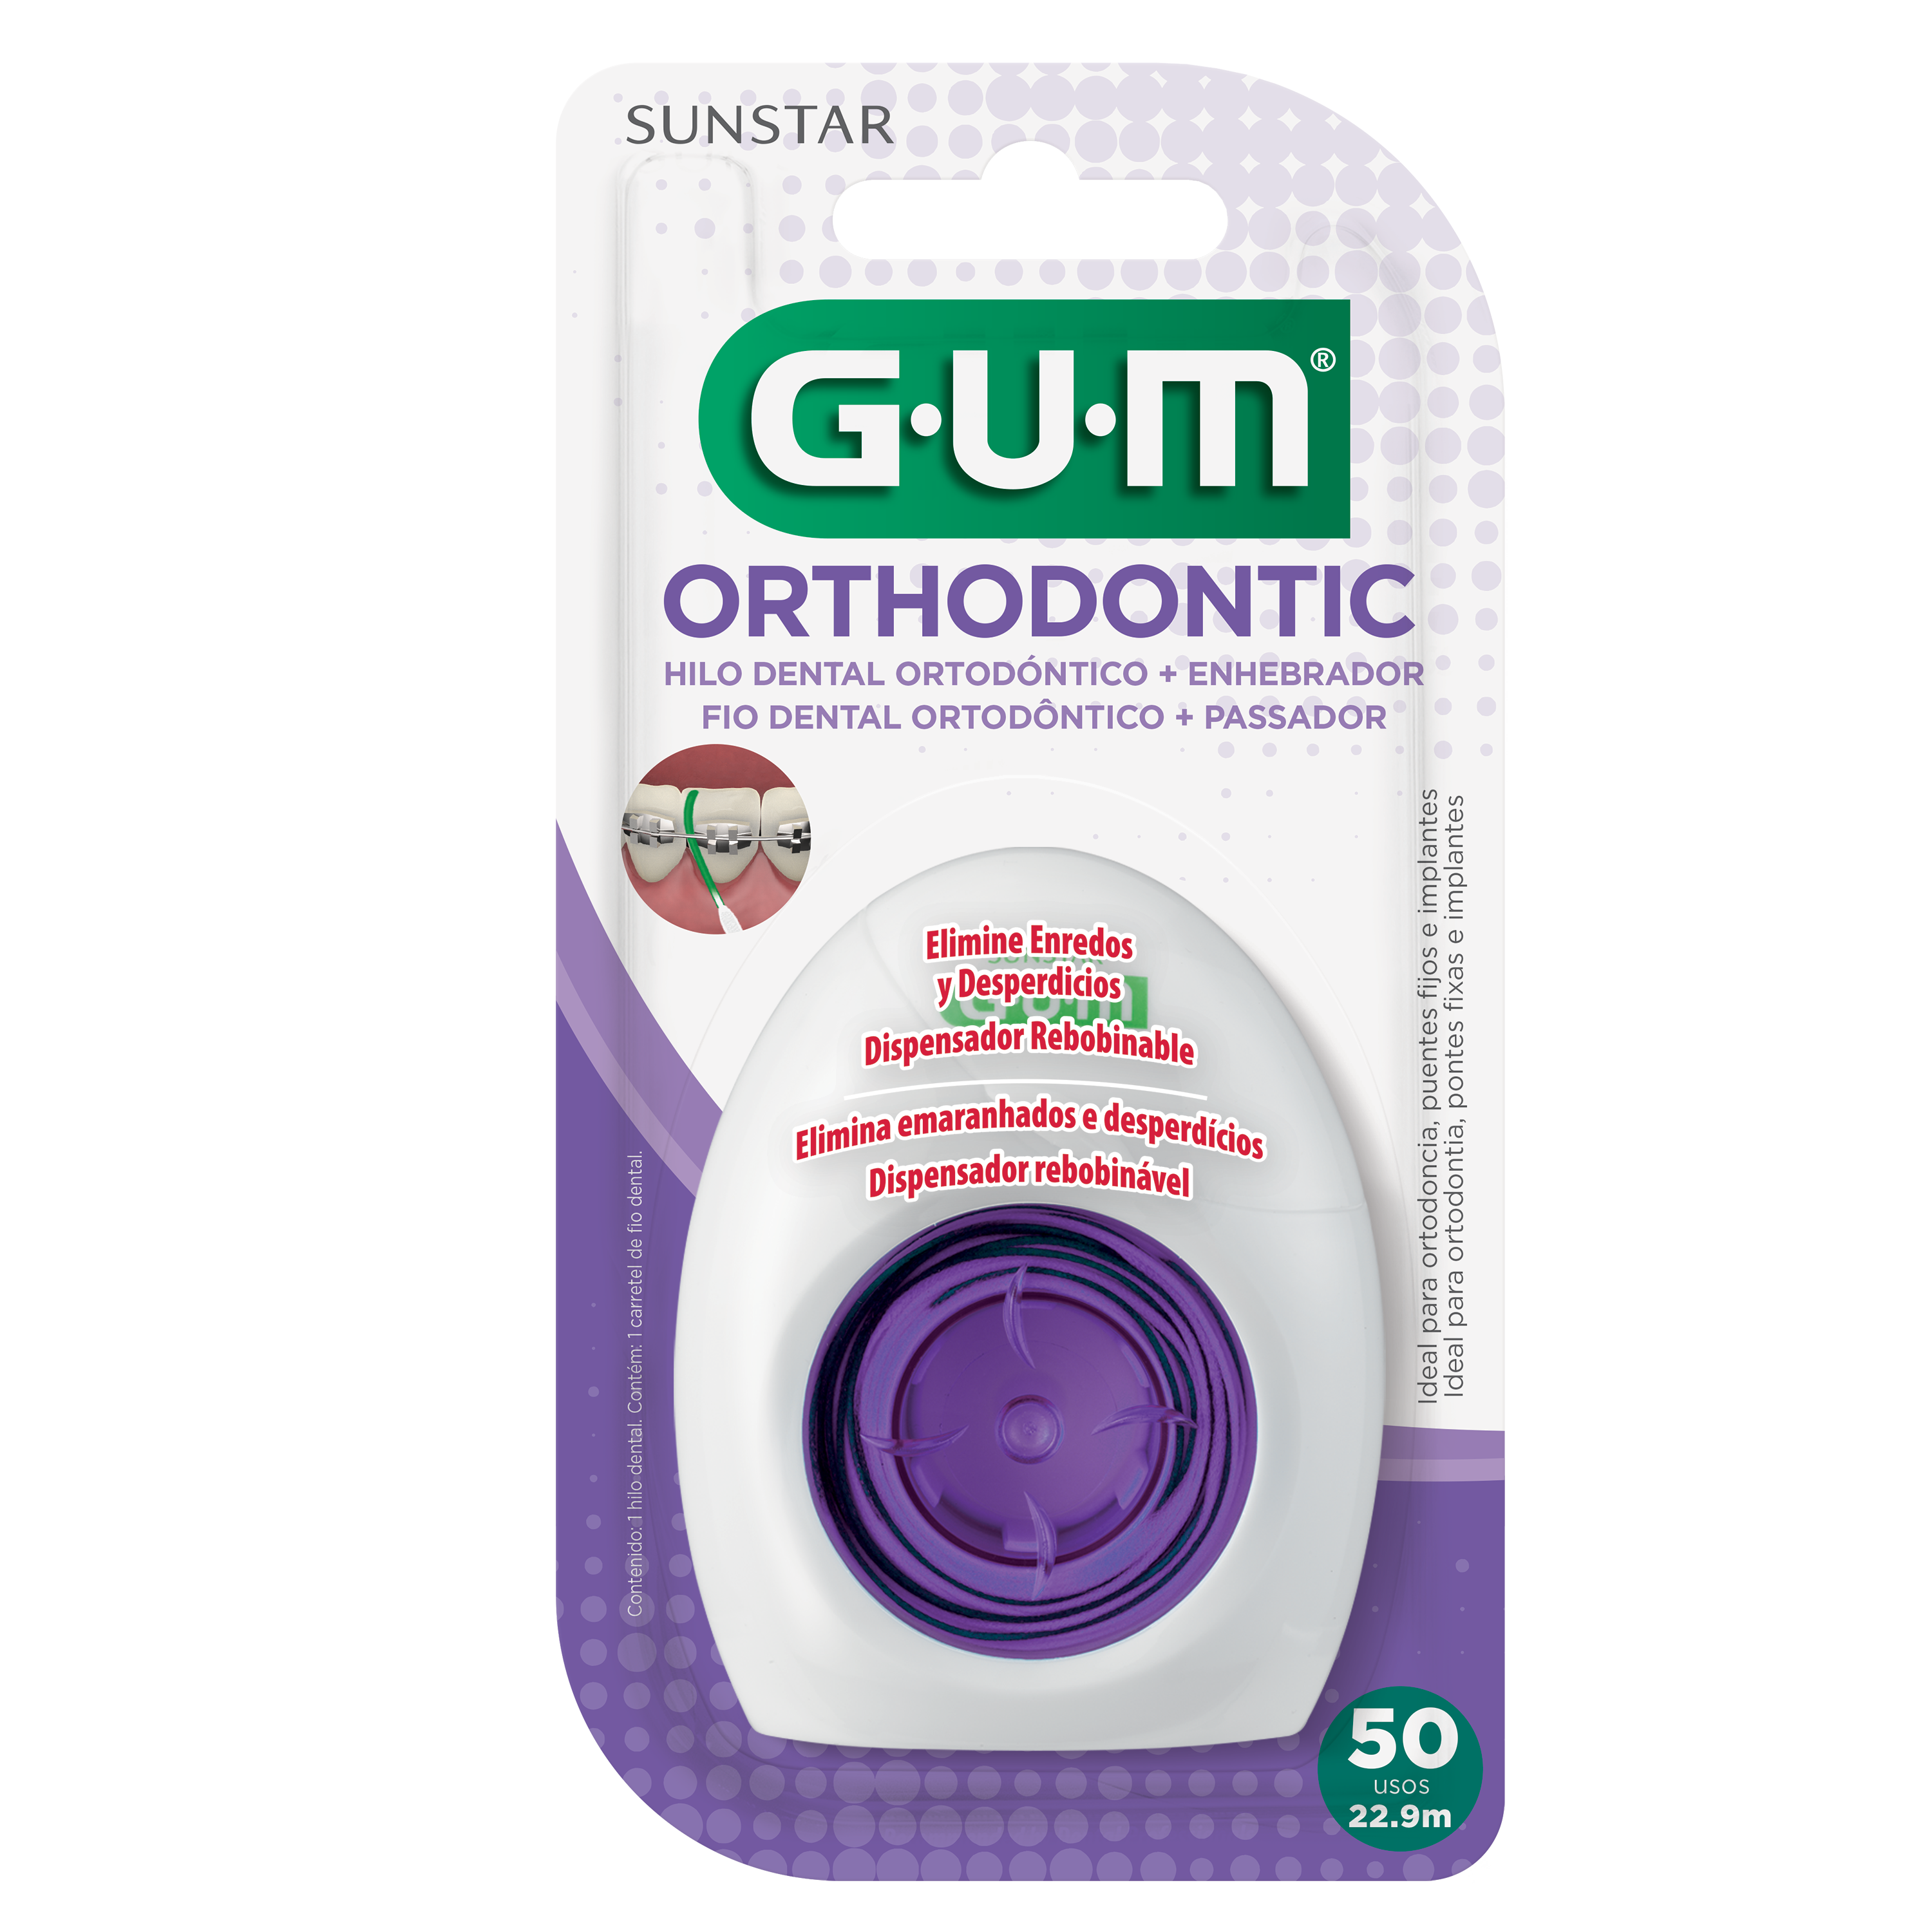 Fio Dental Ortodontico Orthodontic Floss GUM 22.9m - 50 usos